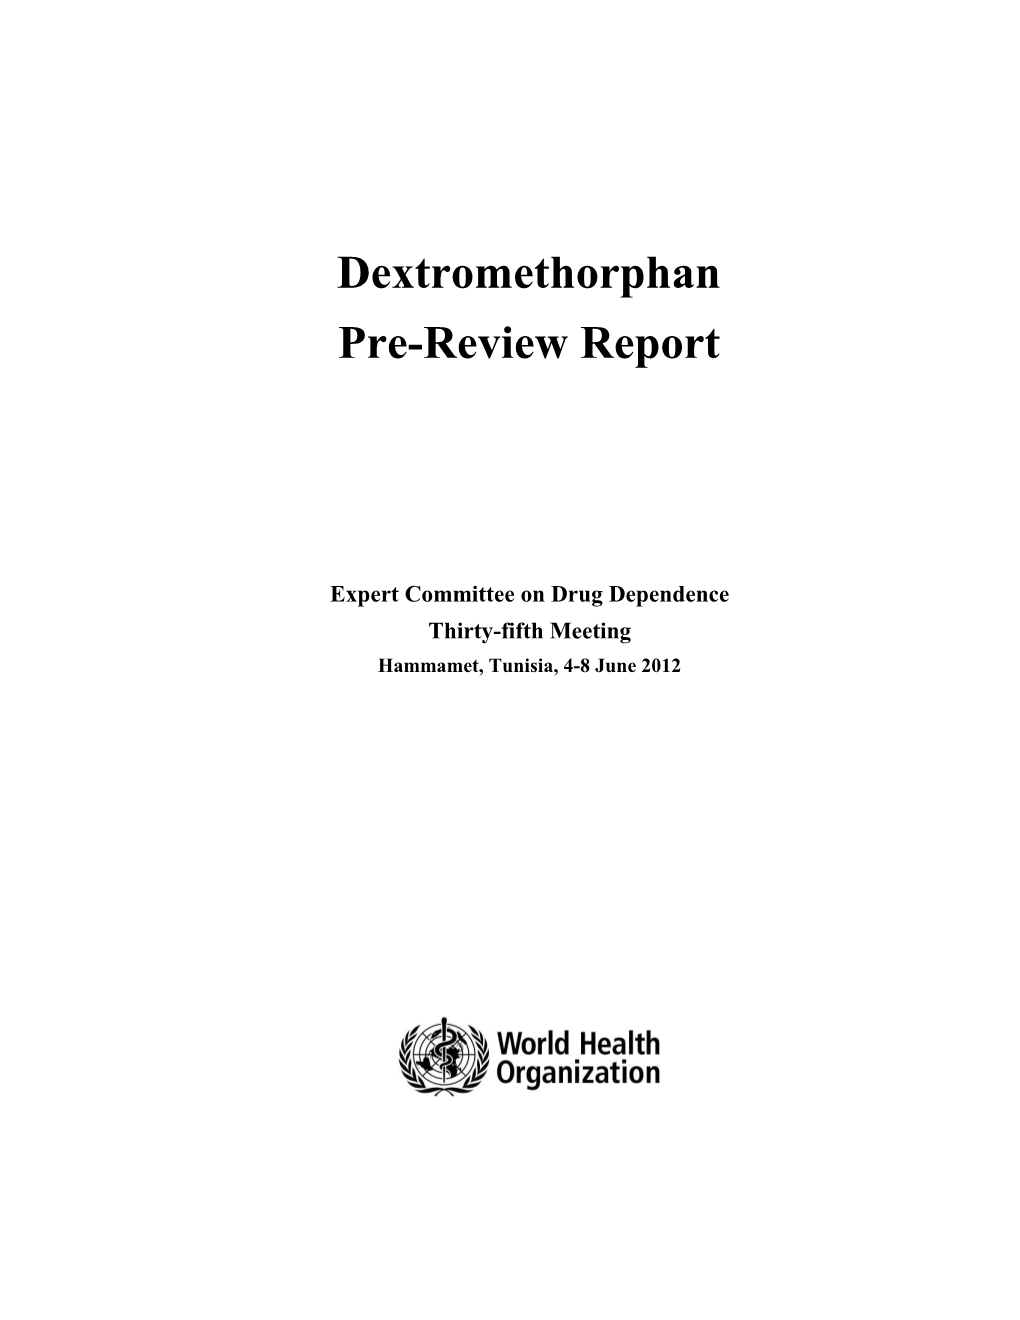 Dextromethorphan Pre-Review Report